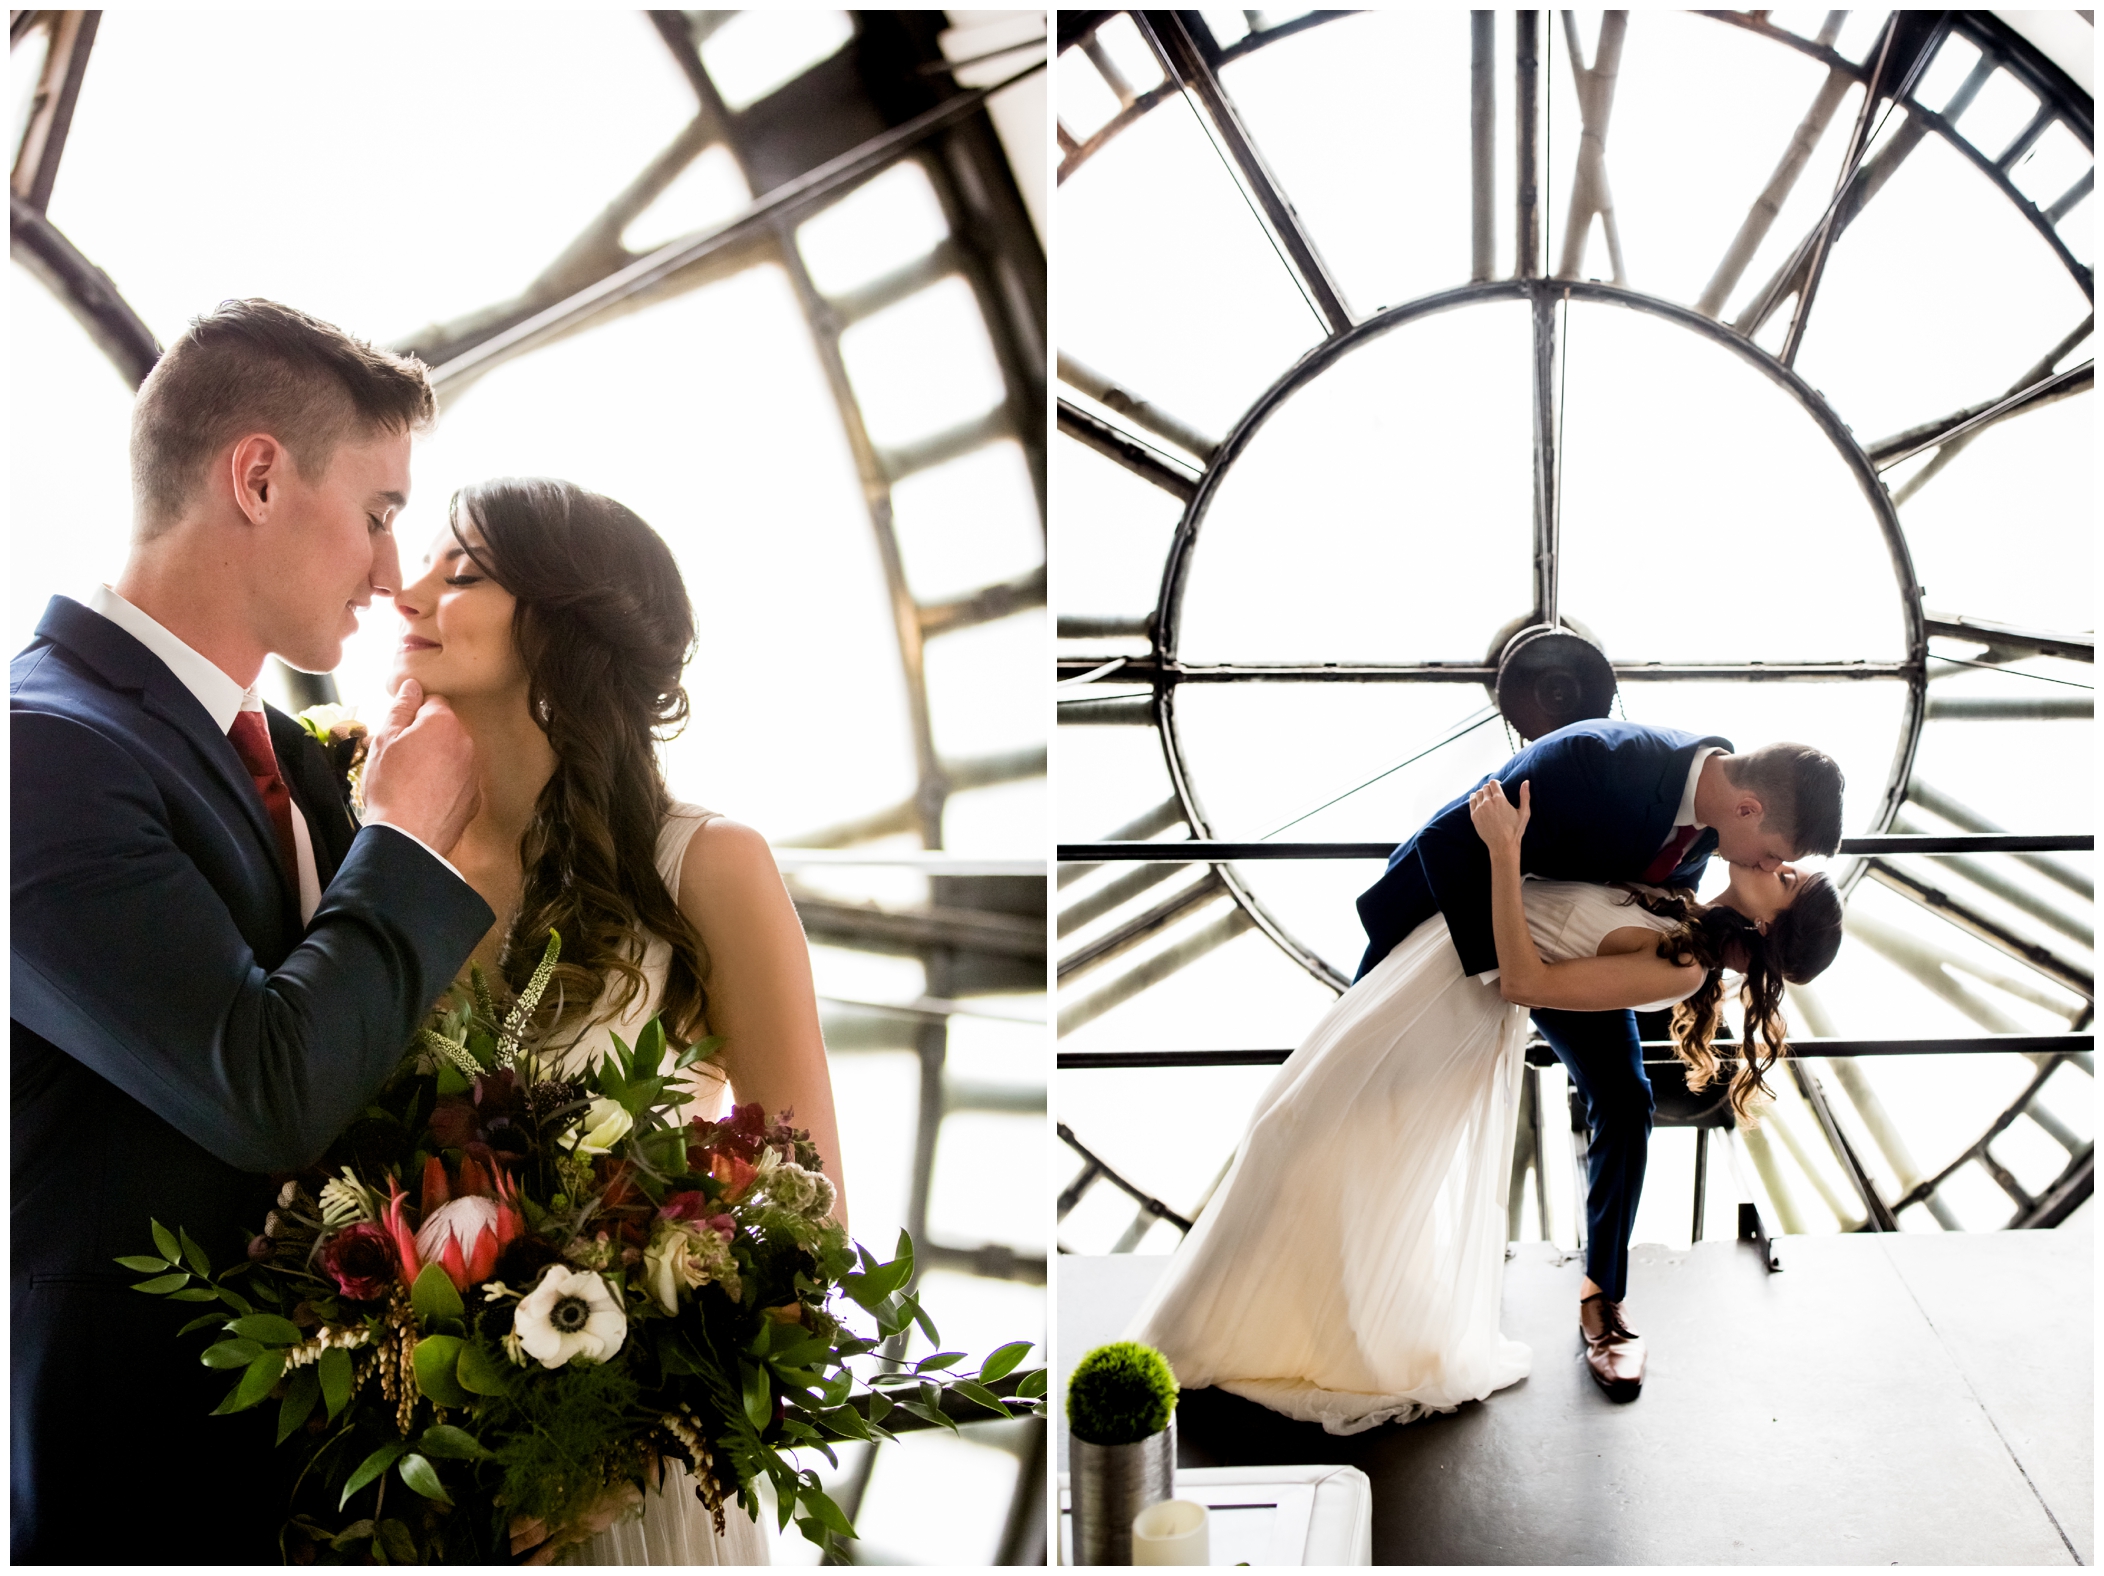 Clock tower events wedding photos by Denver Colorado photographer Plum Pretty Photography